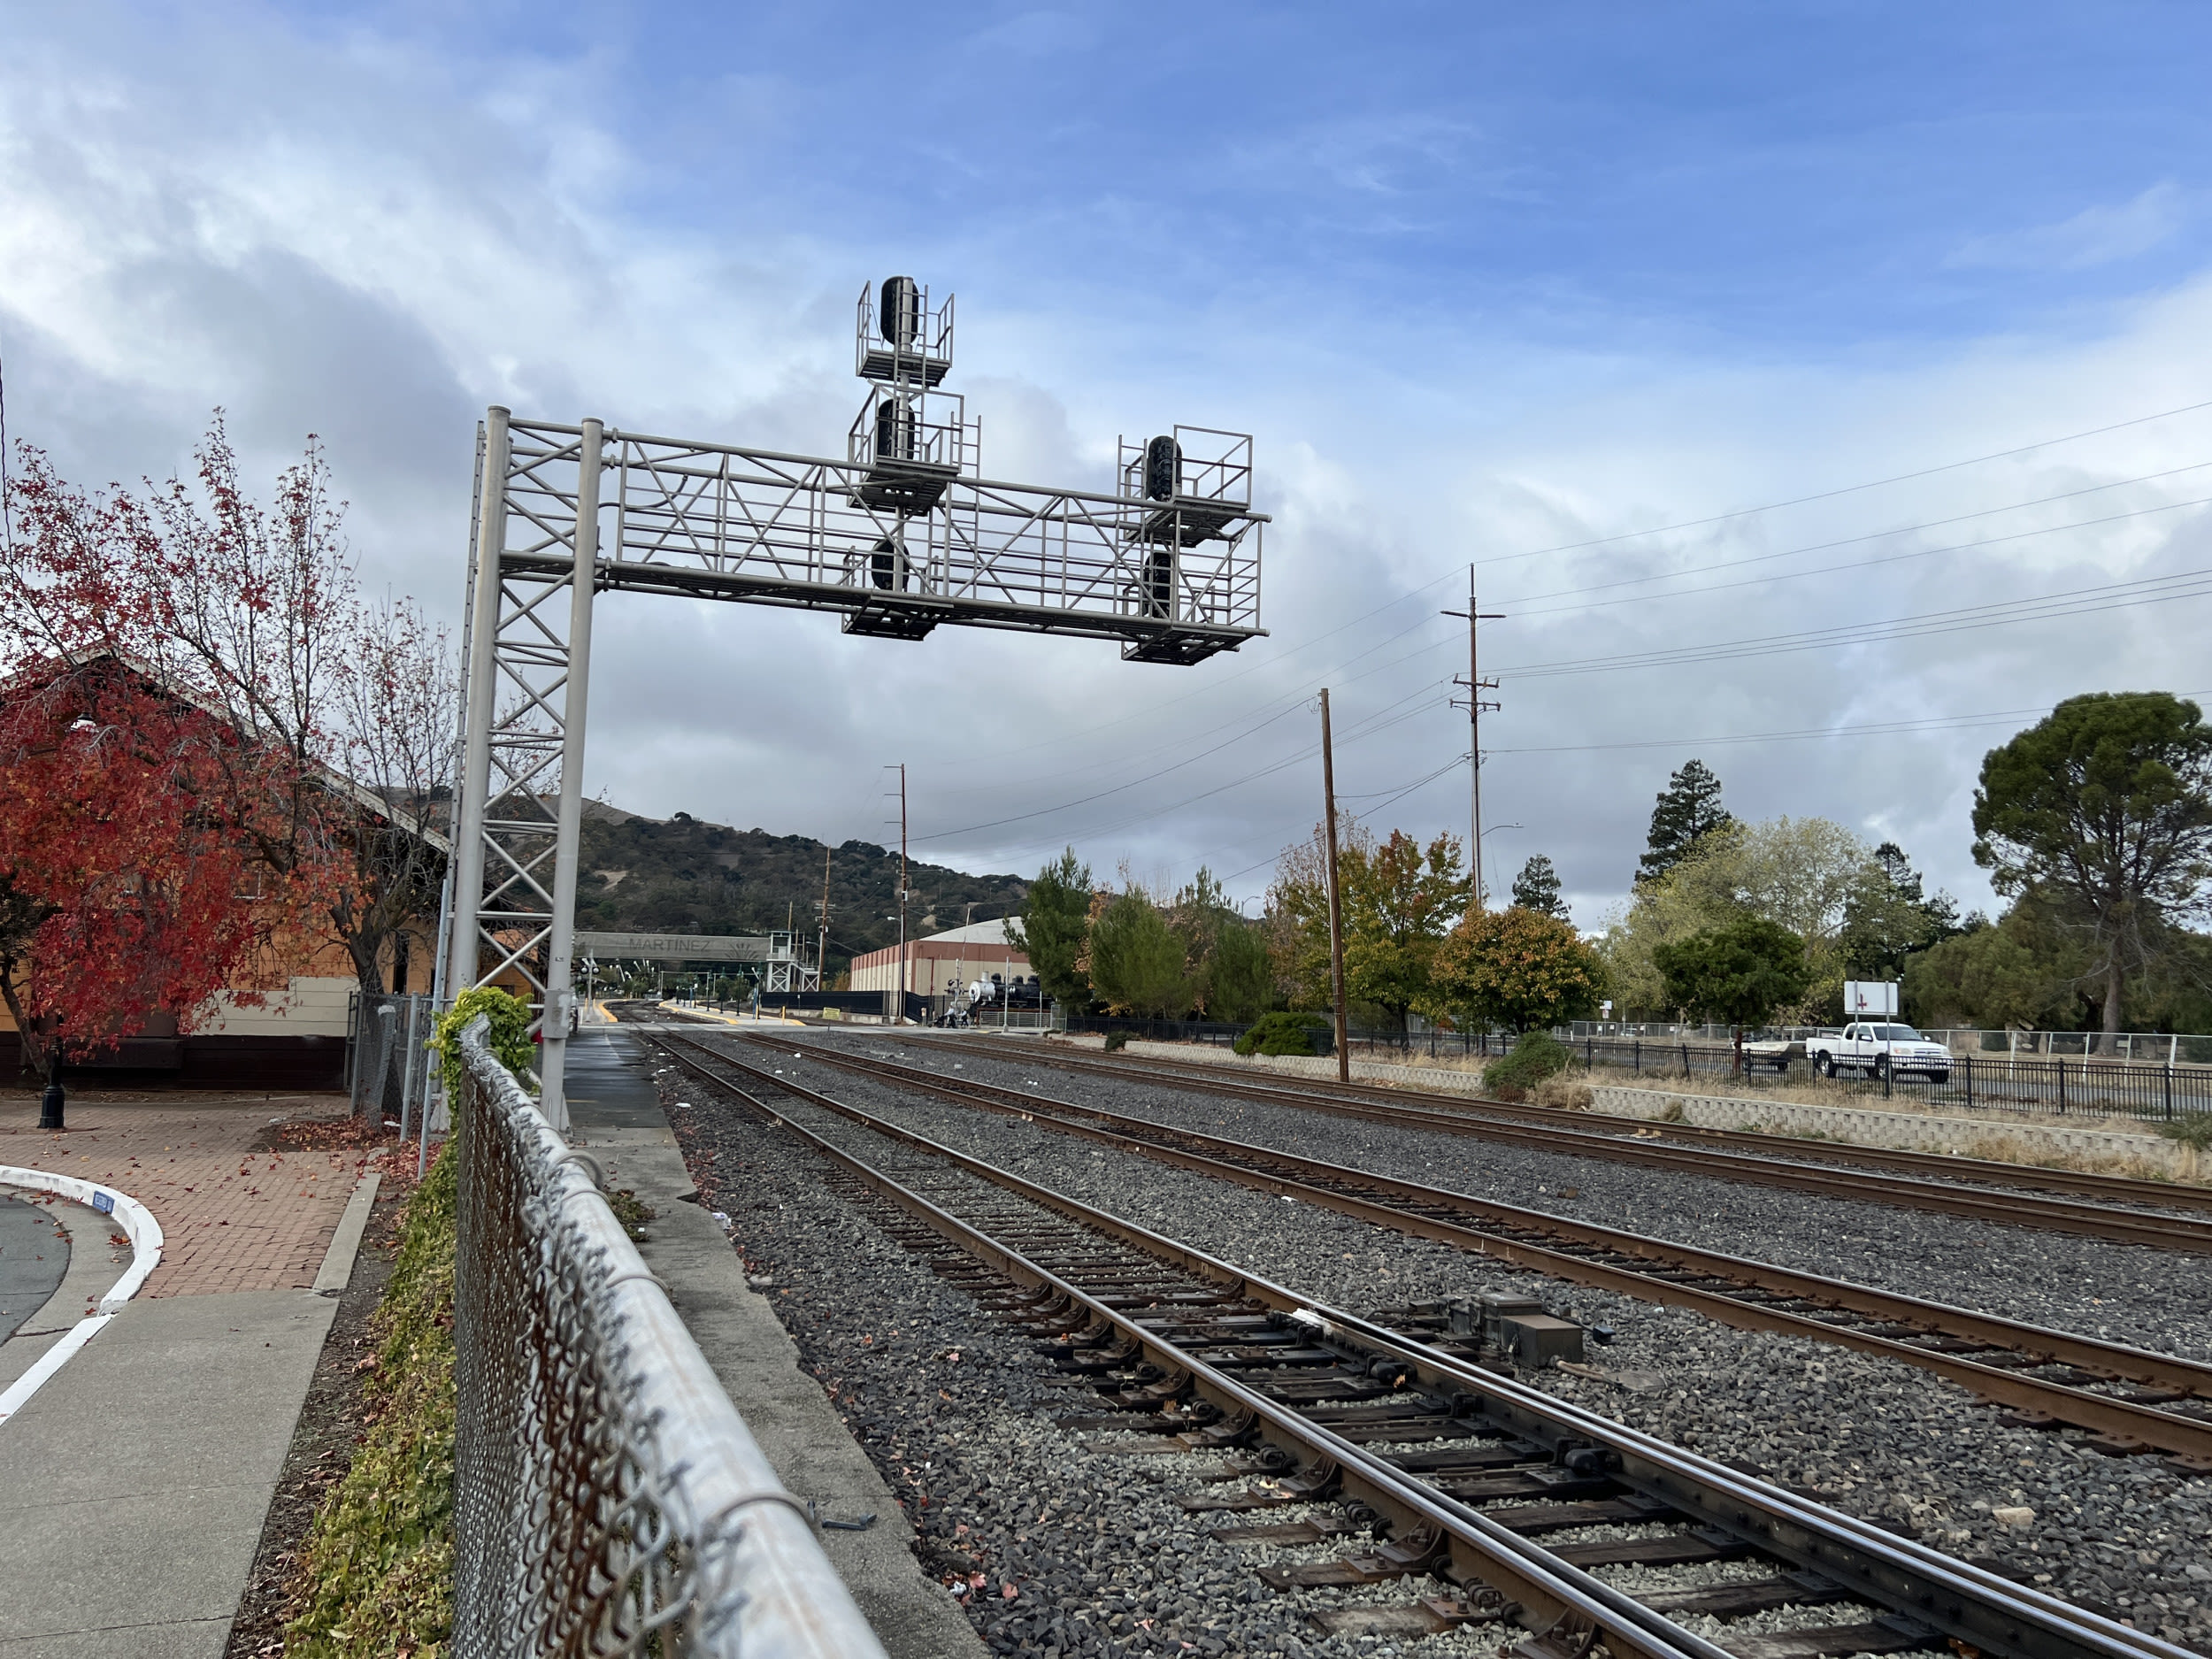 California train line gets a boost